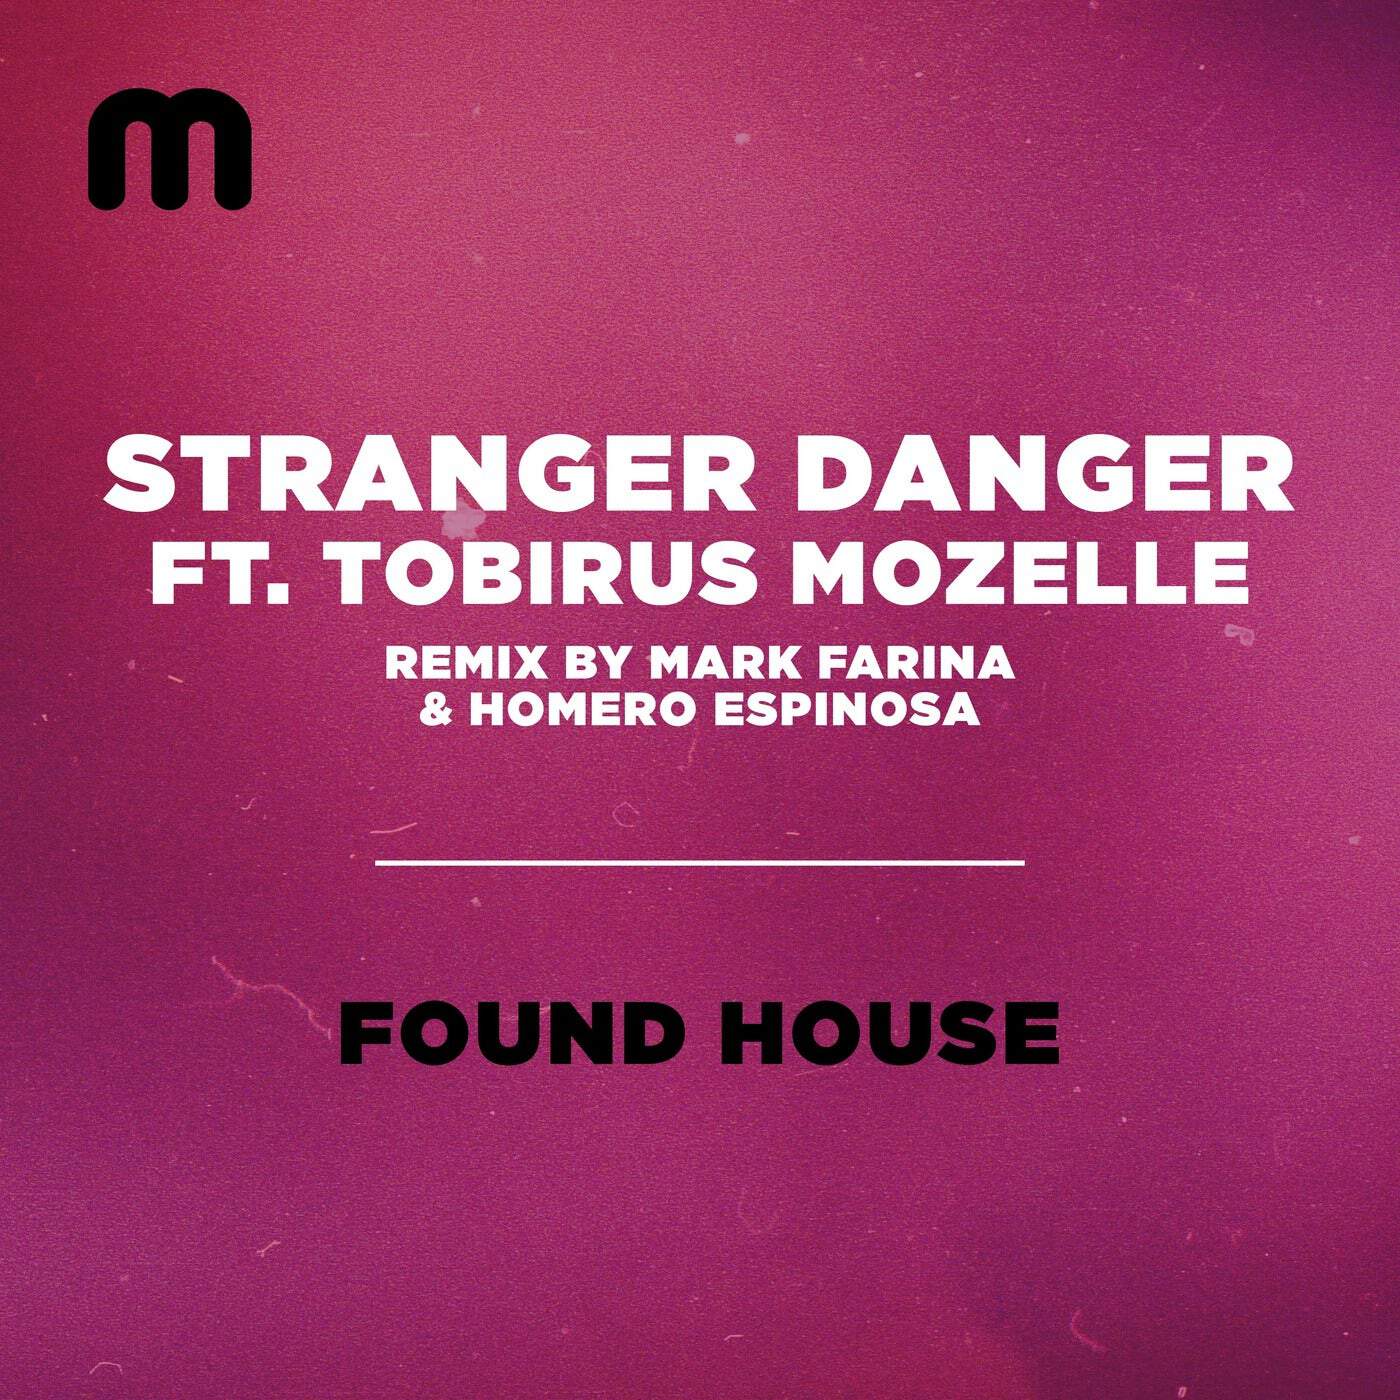 Download Stranger Danger, Tobirus Mozelle - Found House on Electrobuzz